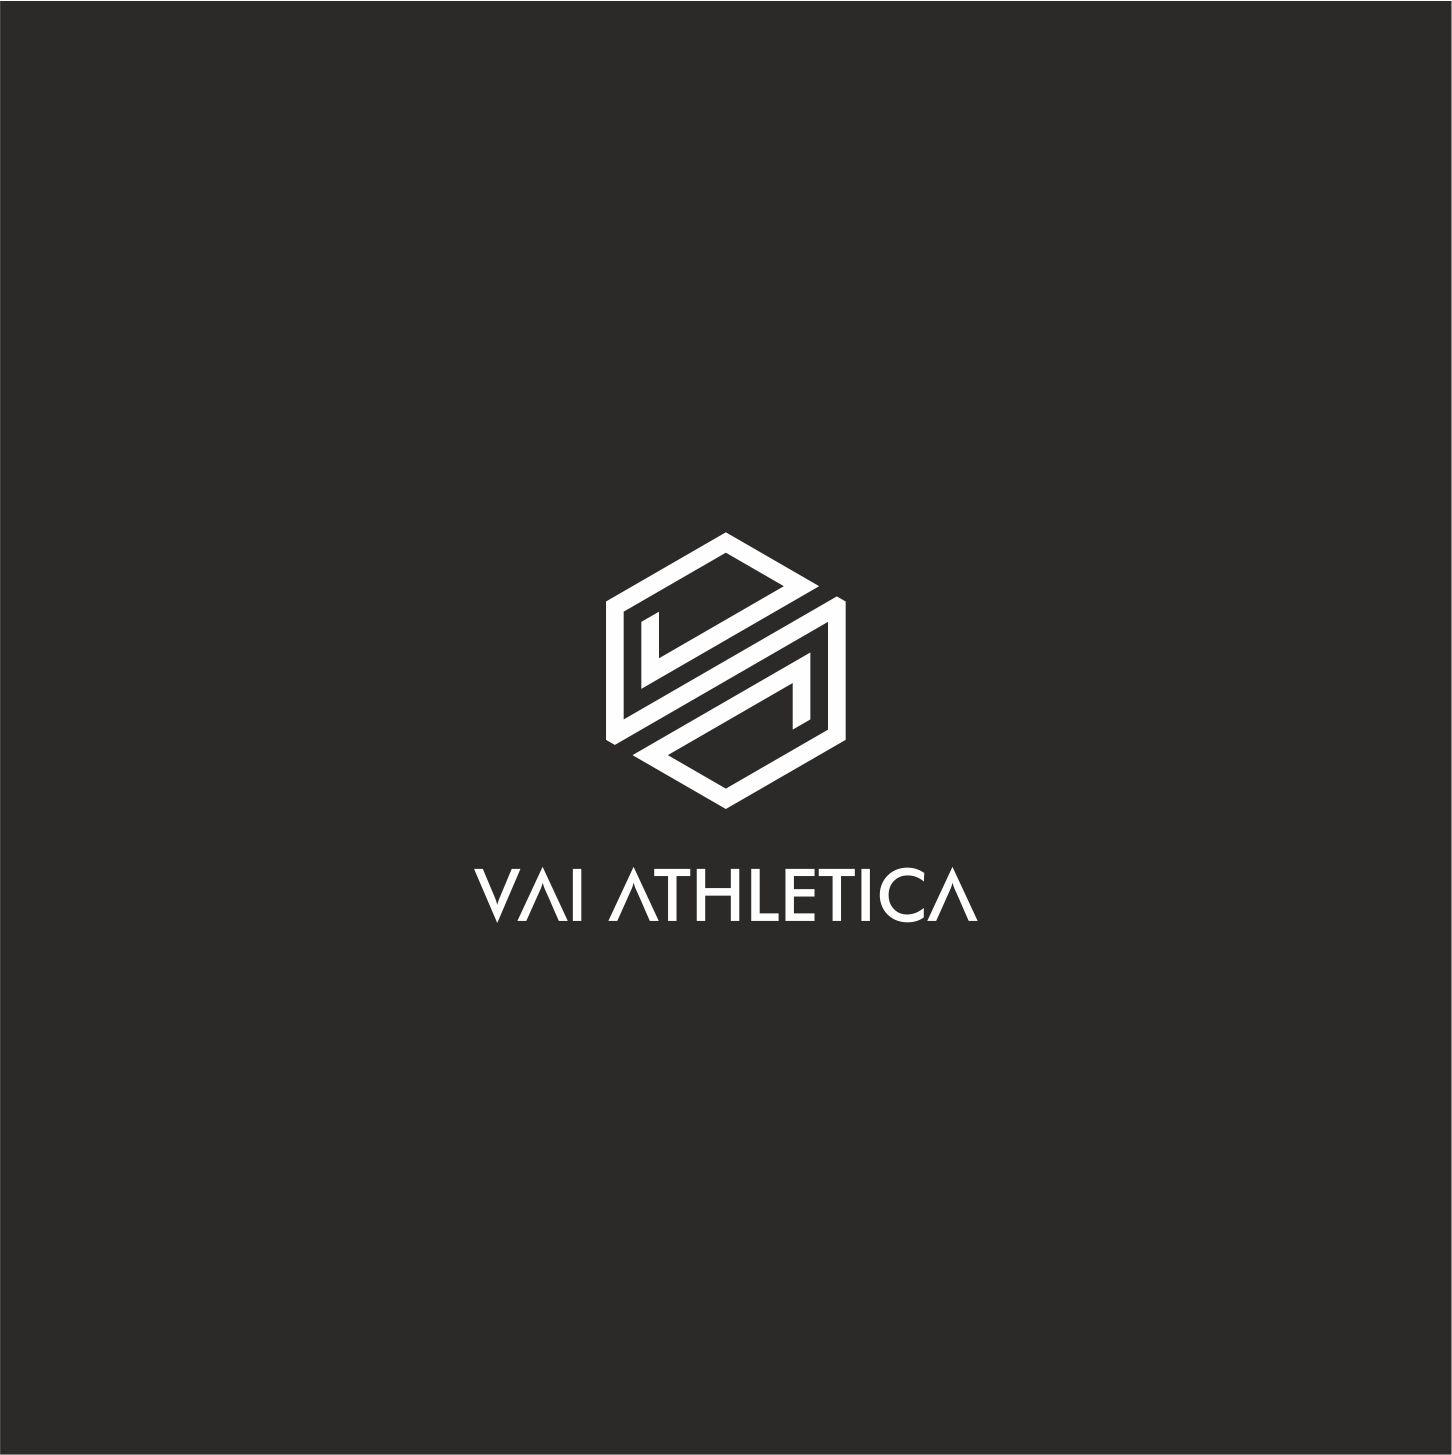 Etc Clothing Logo - Bold, Serious, Clothing Logo Design for VAI ATHLETICA by Yurii ...